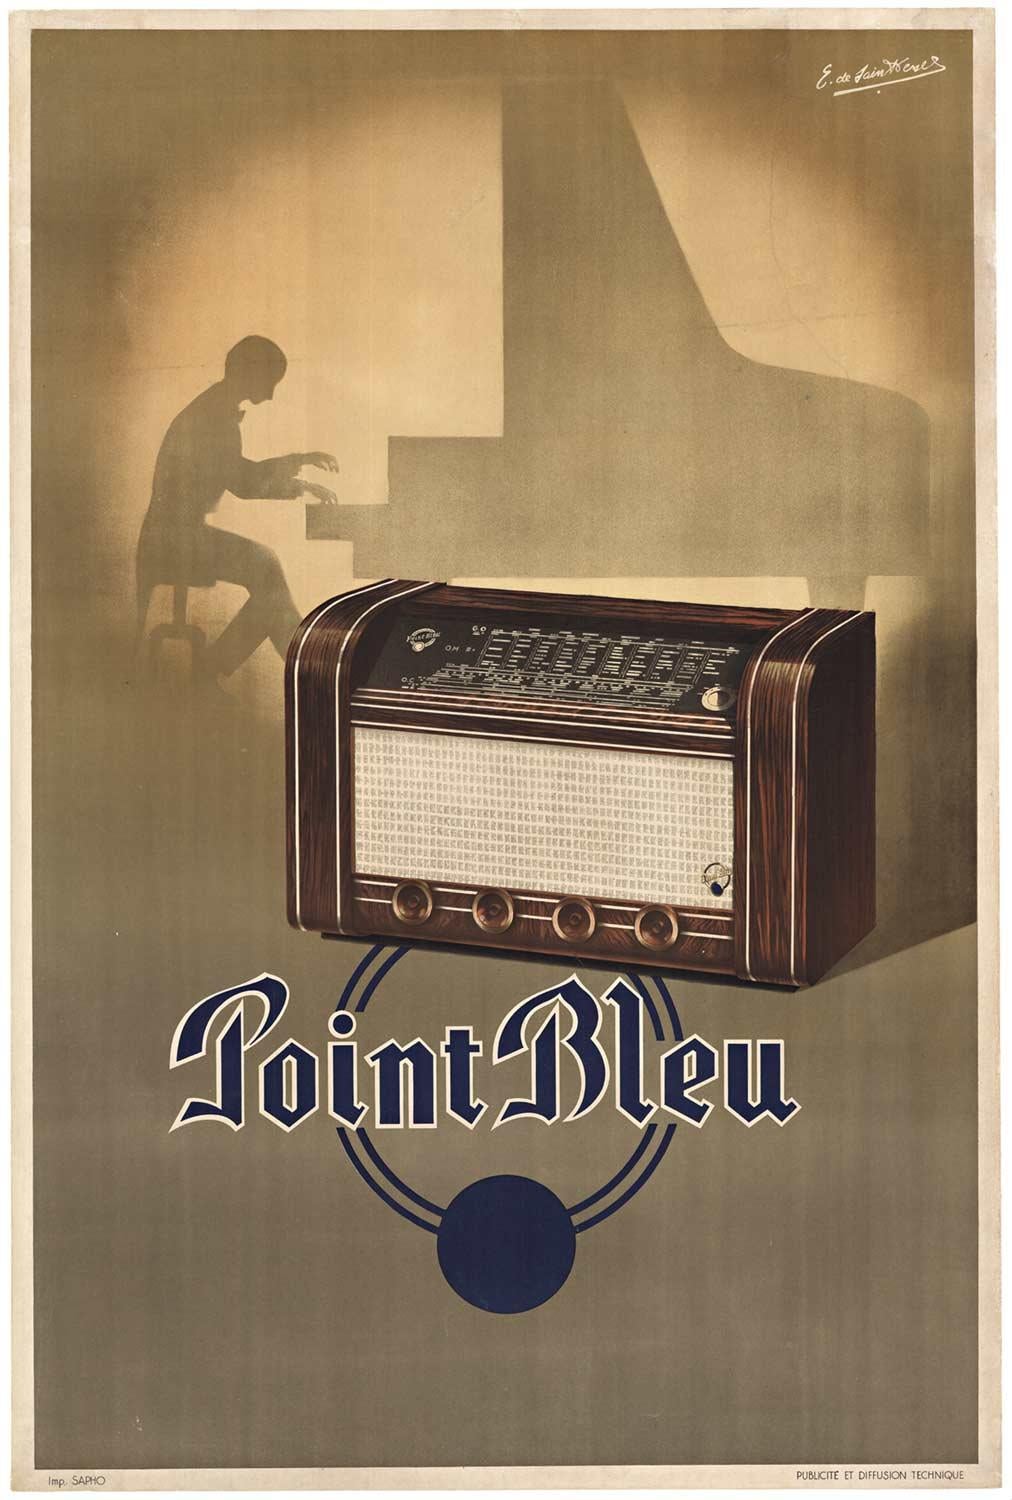 Original "Point Bleu" vintage art deco French radio poster